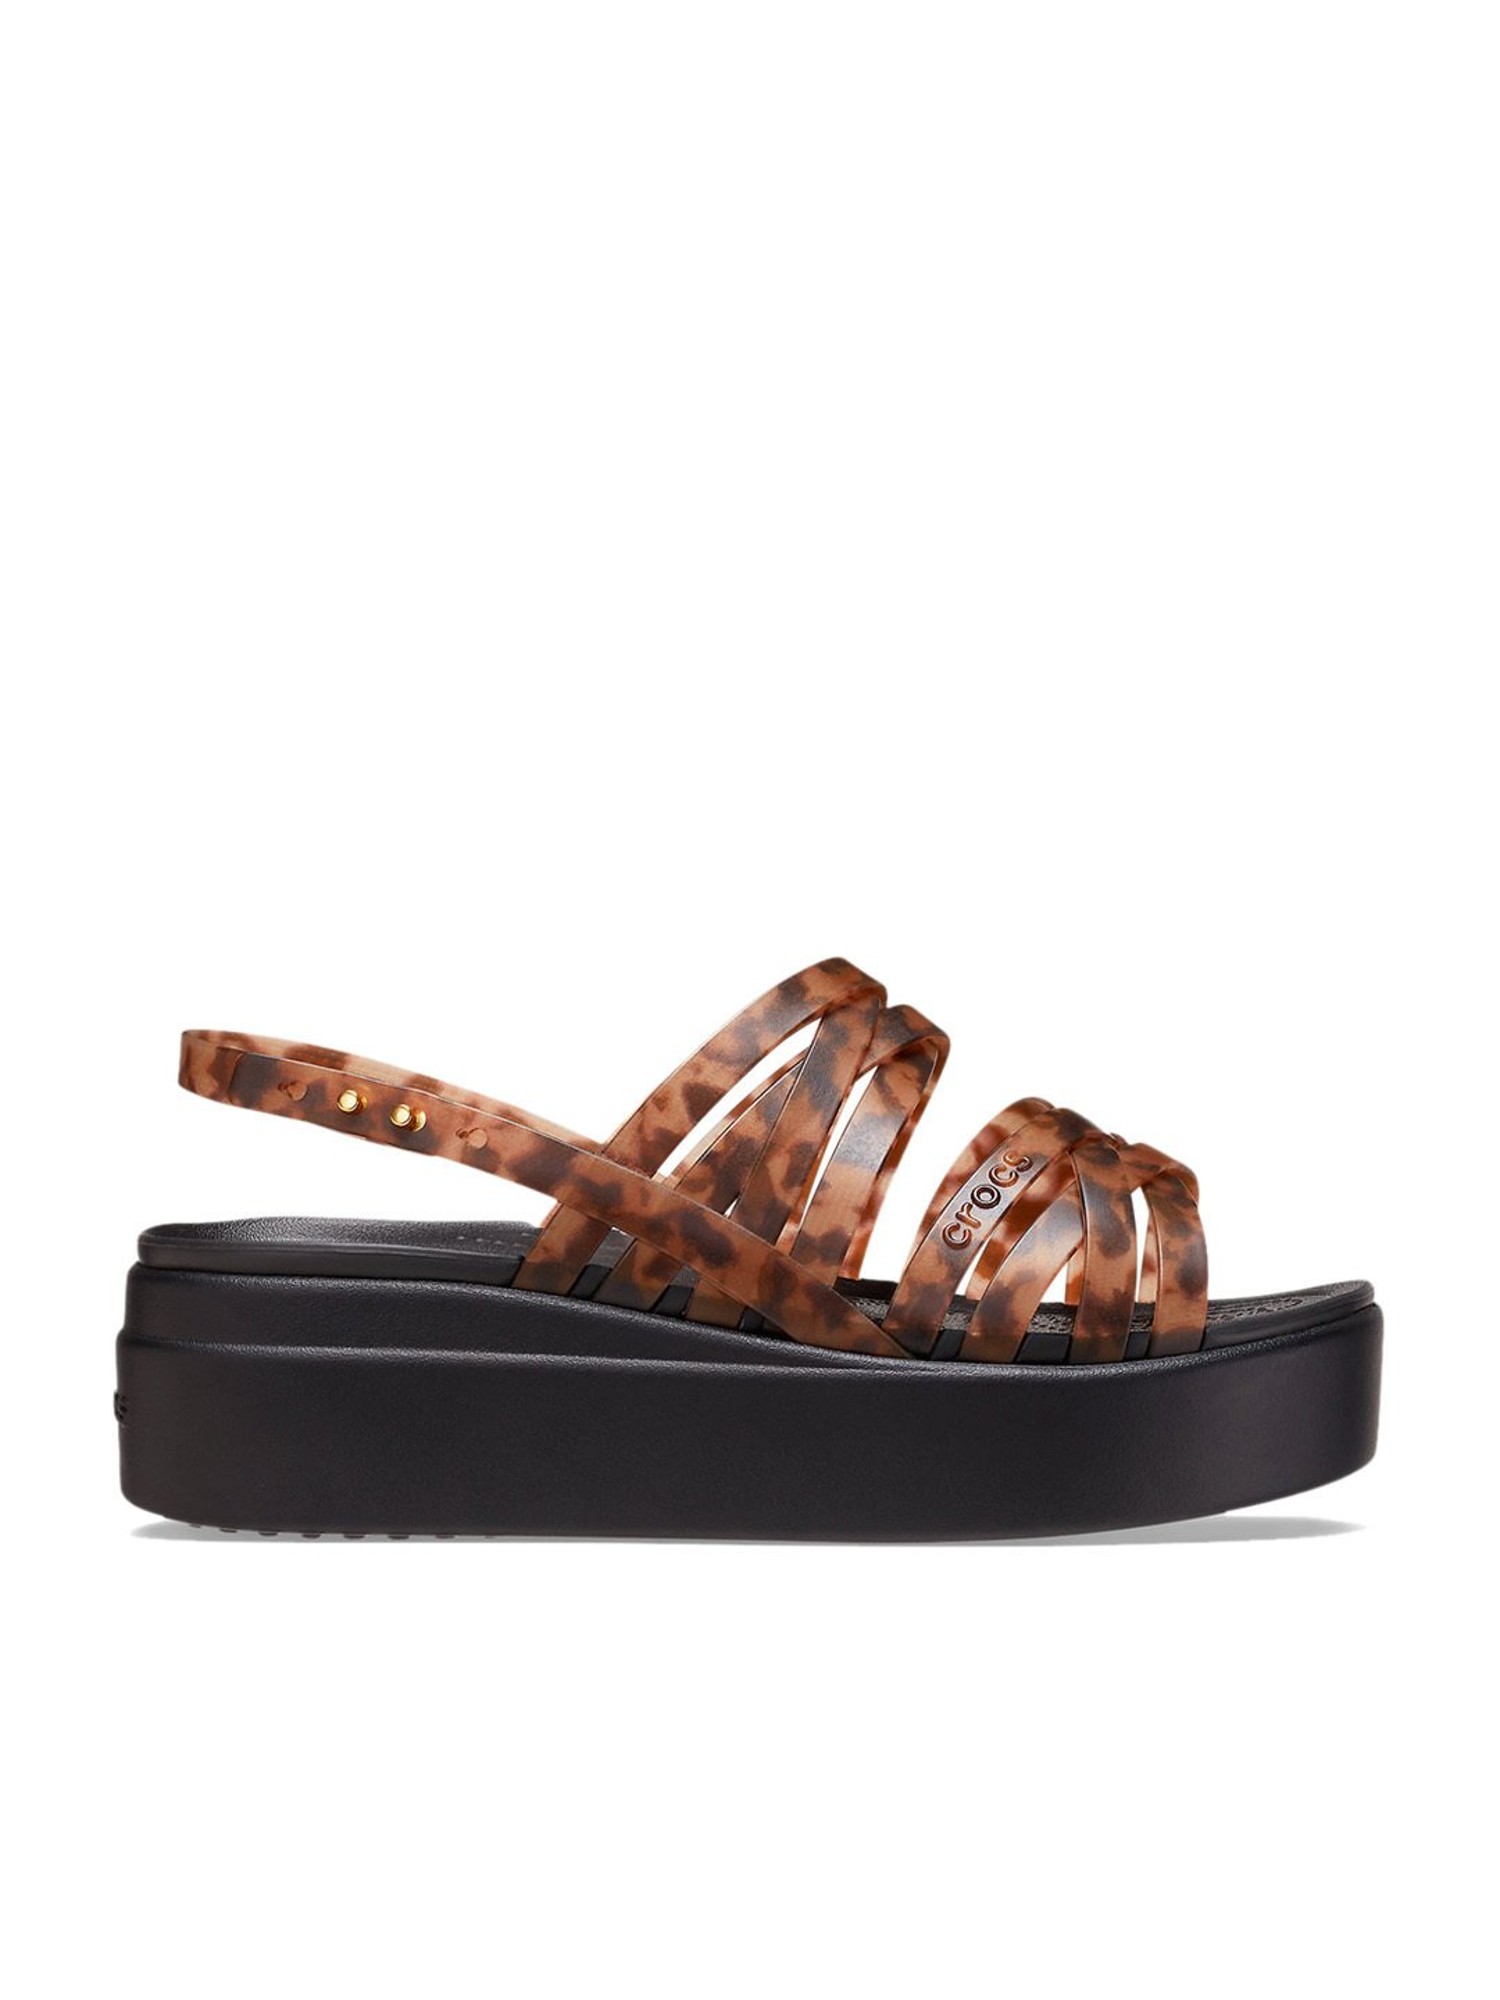 Girls' Crocs Sandals, size 24 (Pink) | Emmy